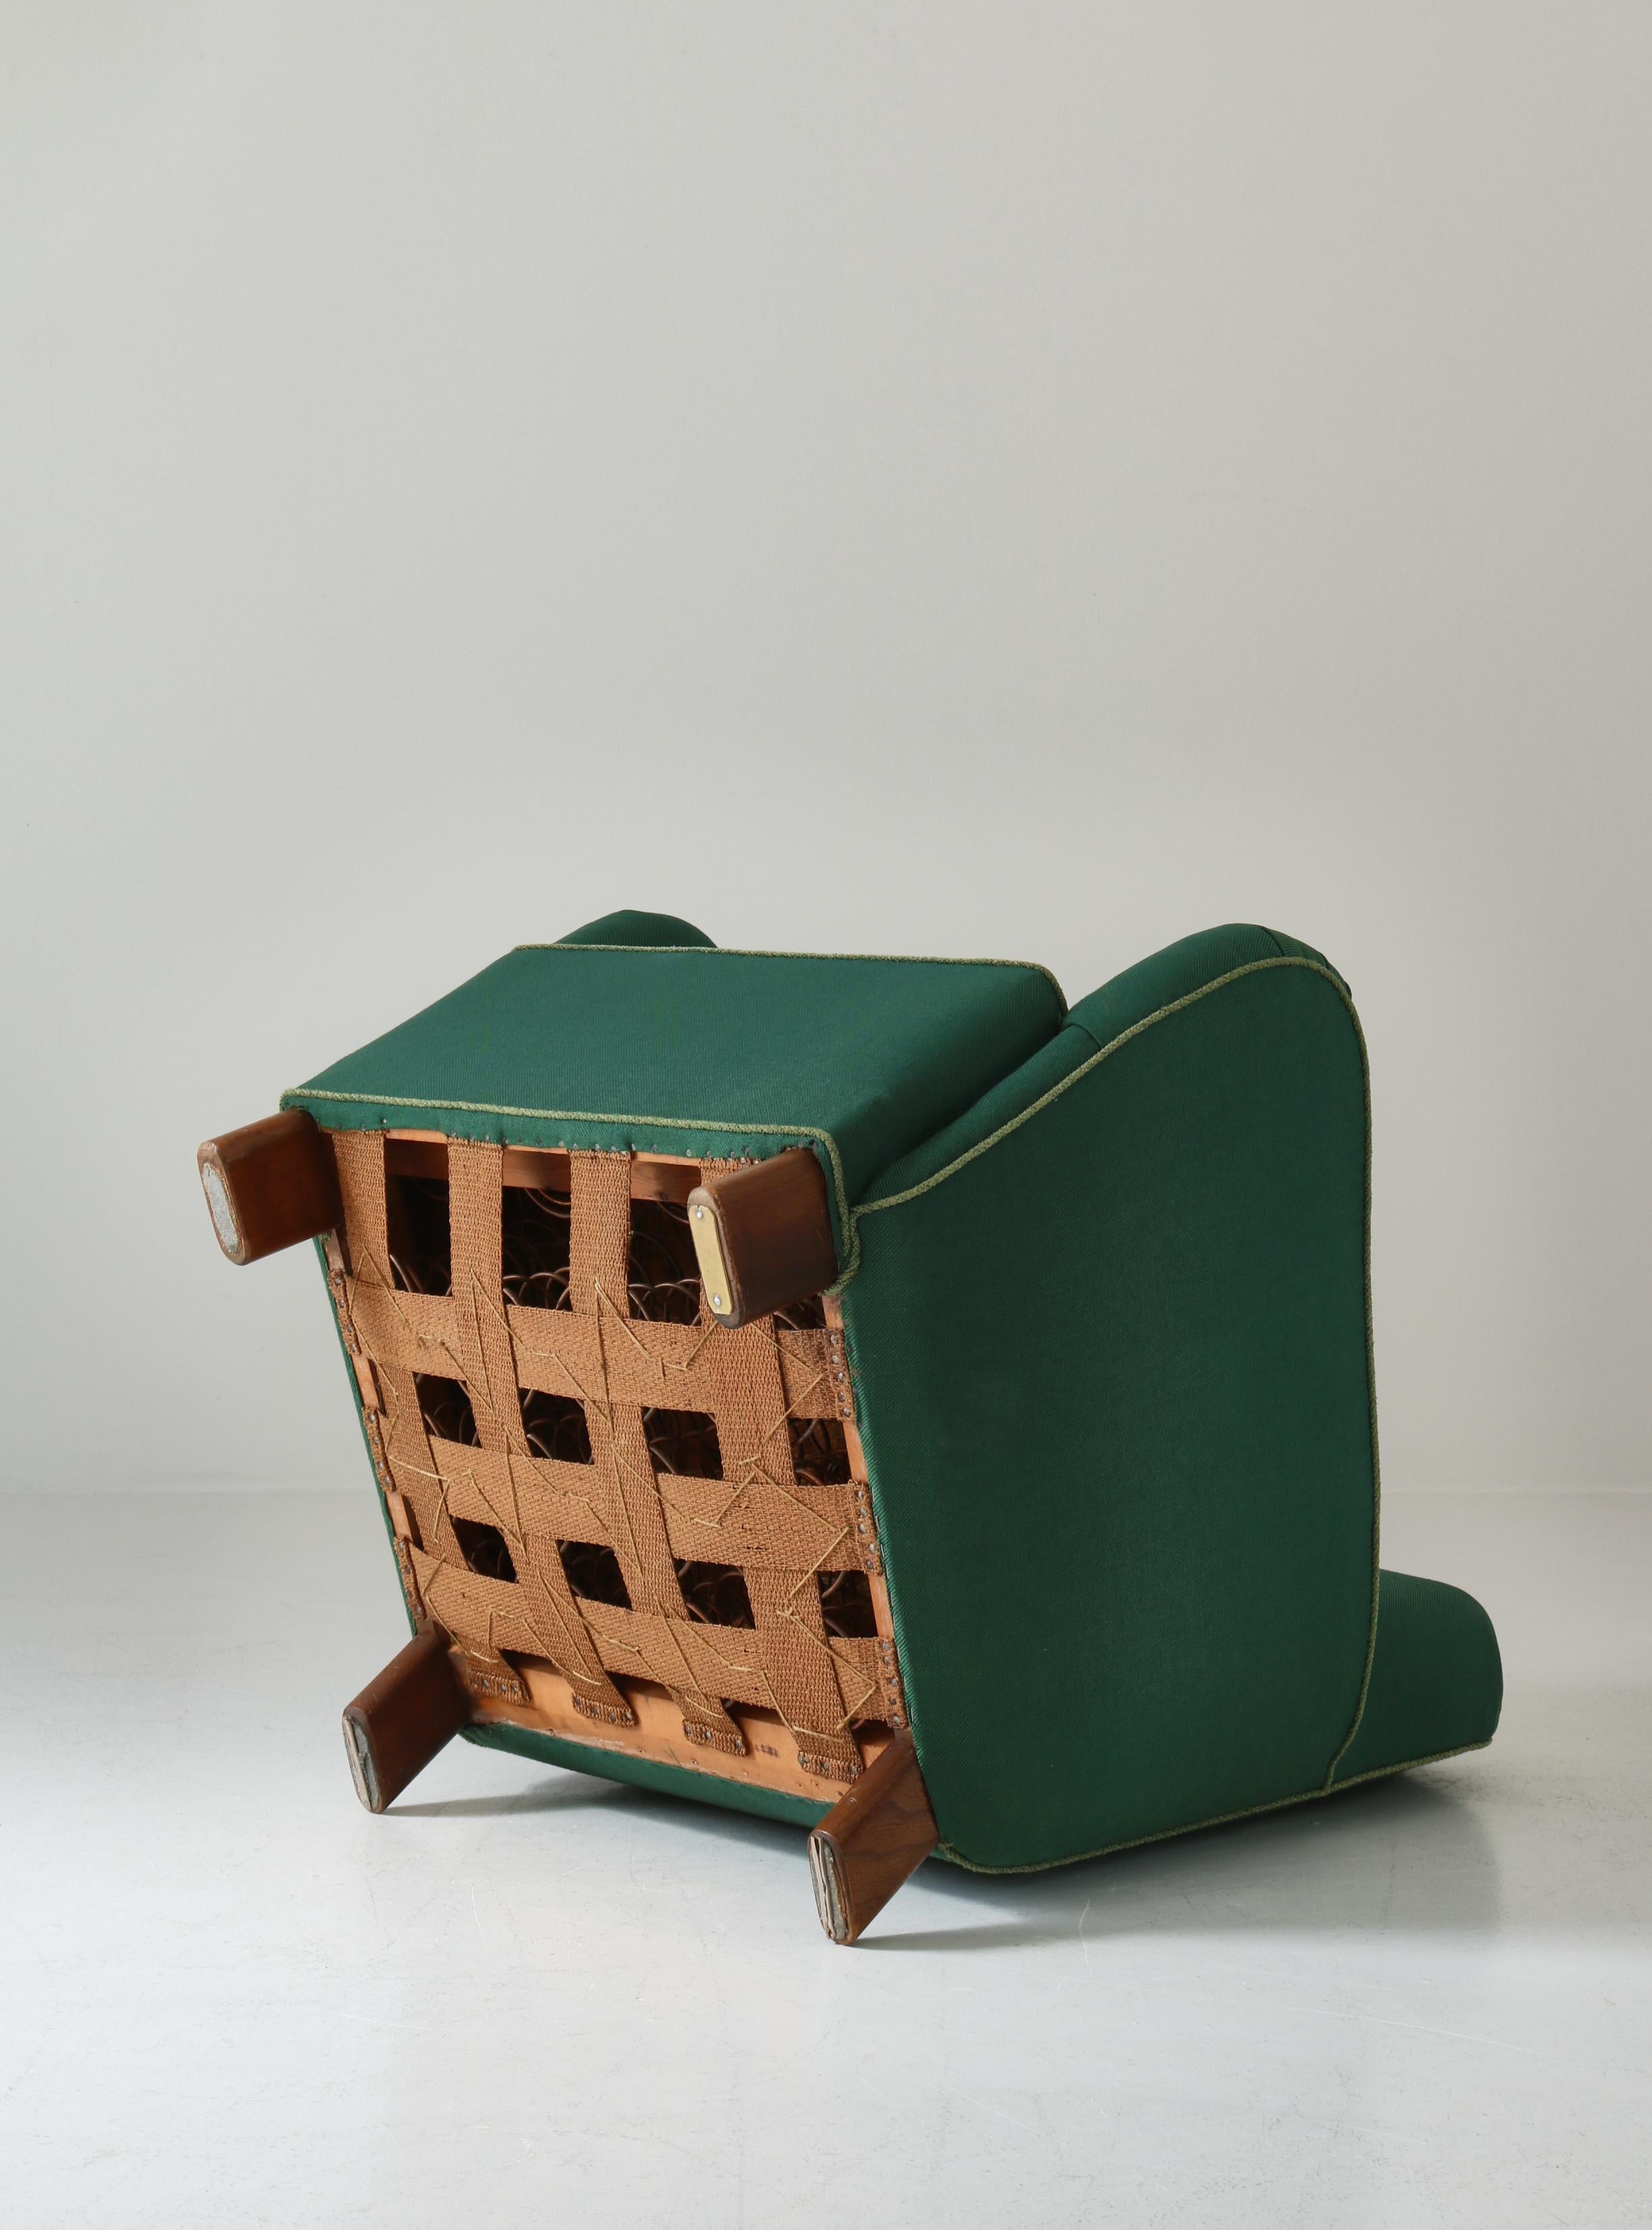 Fritz Hansen Lounge Chair 